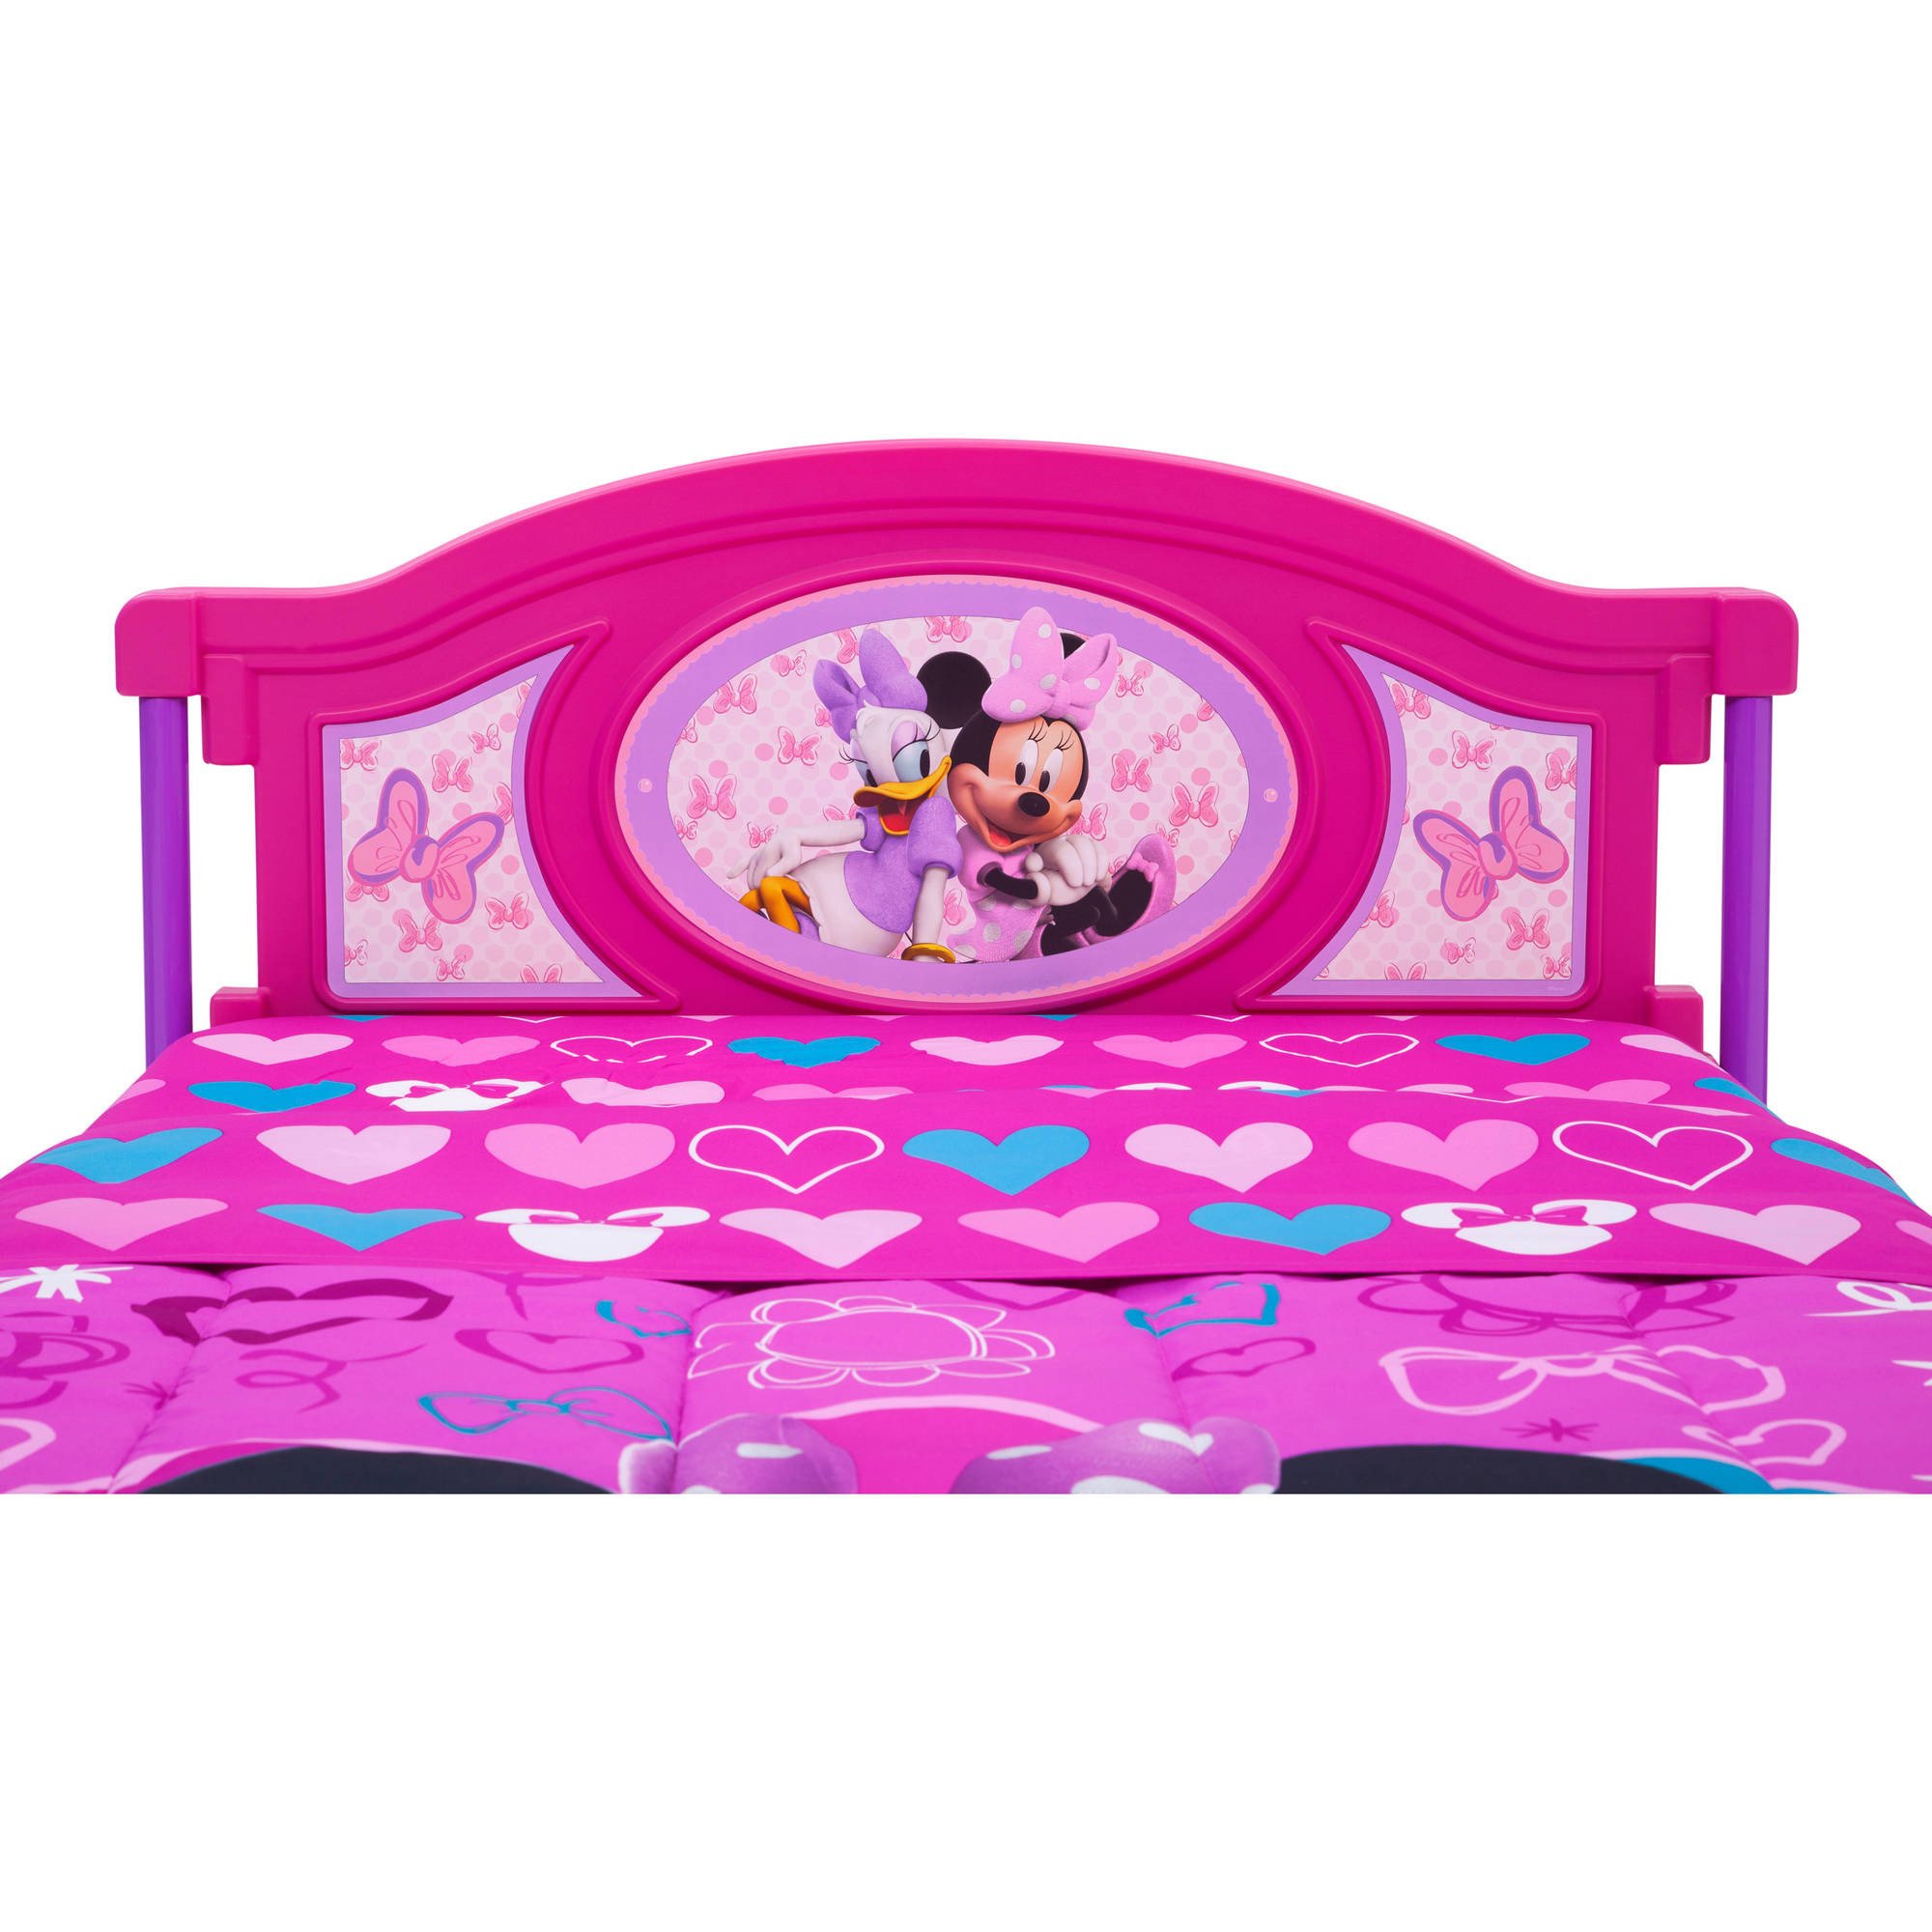 Minnie Mouse Twin Bedroom Set New Disney Minnie Mouse Plastic toddler Bed Disney Minnie Mouse